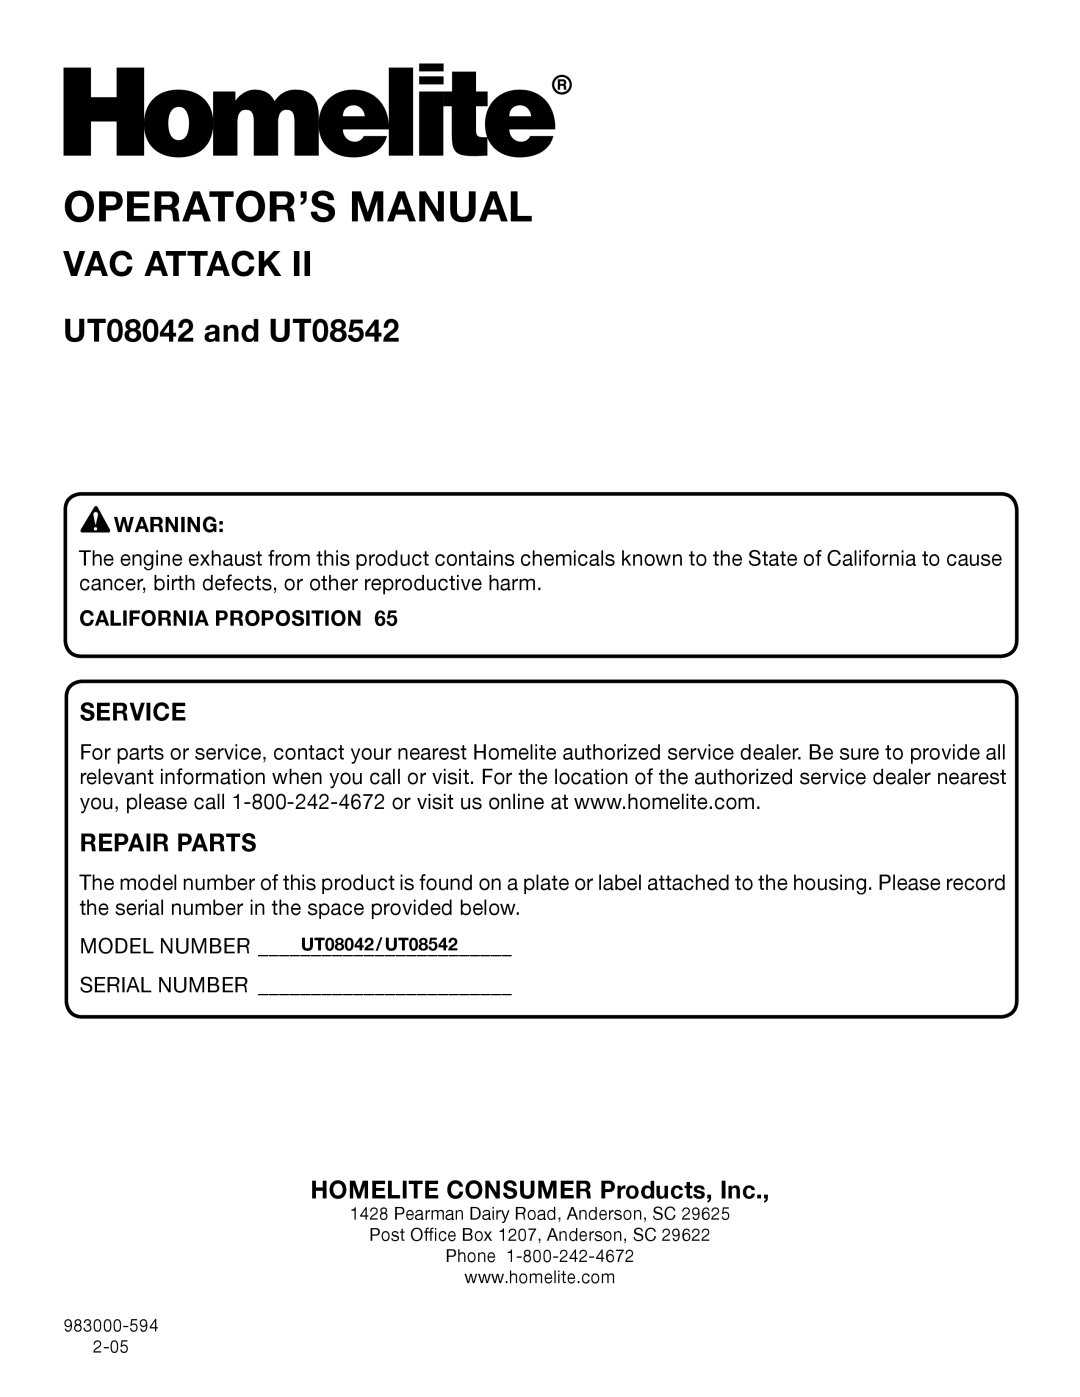 Homelite Operator’S Manual, Vac Attack, UT08042 and UT08542, Service, Repair Parts, HOMELITE CONSUMER Products, Inc 